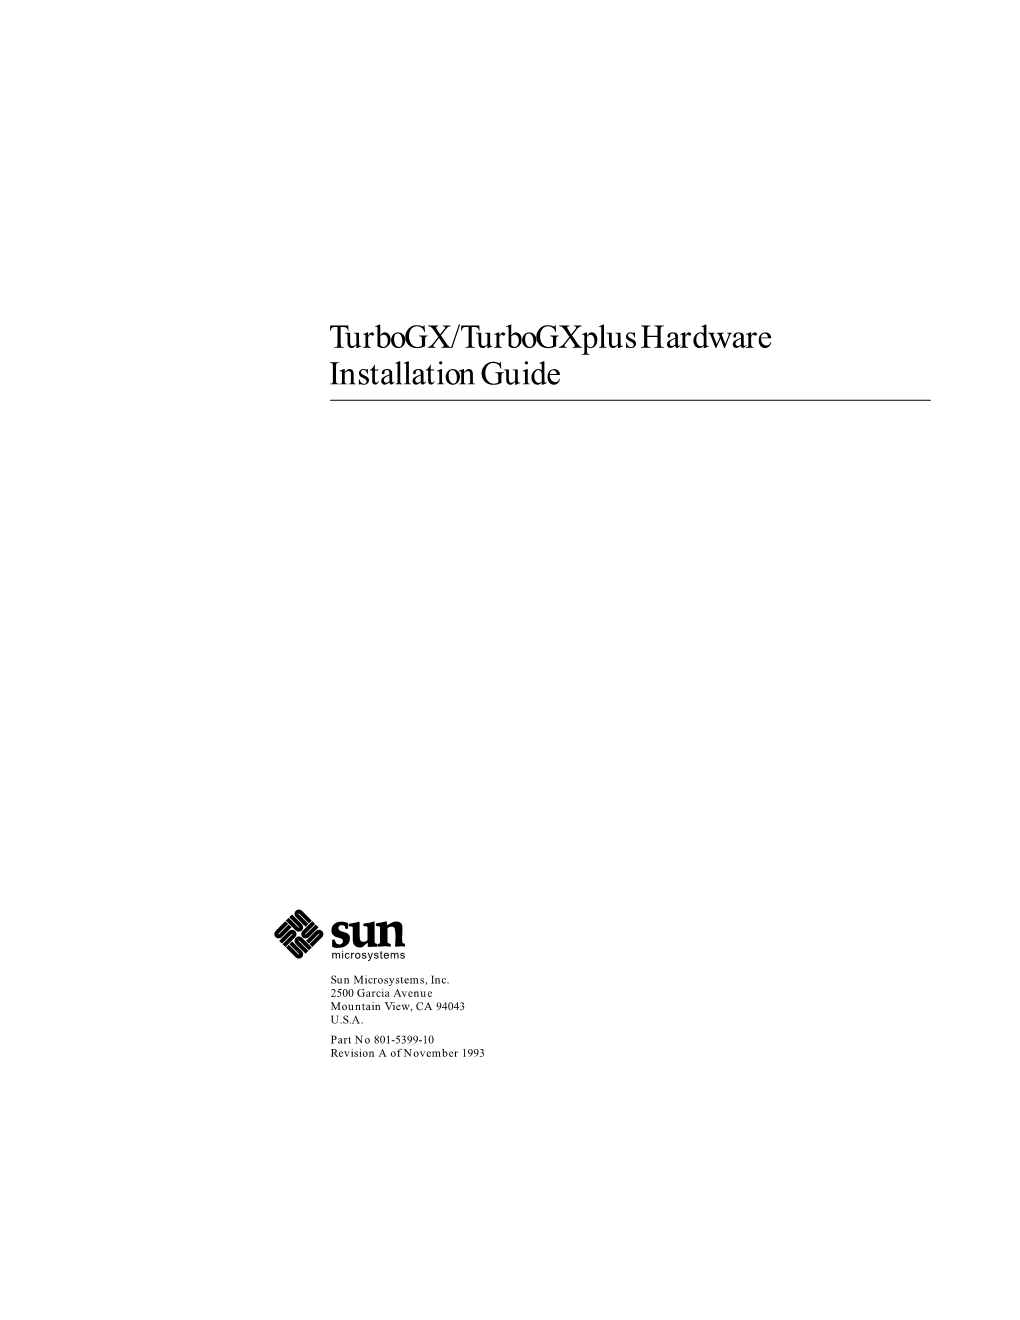 Turbogx/Turbogxplus Hardware Installation Guide